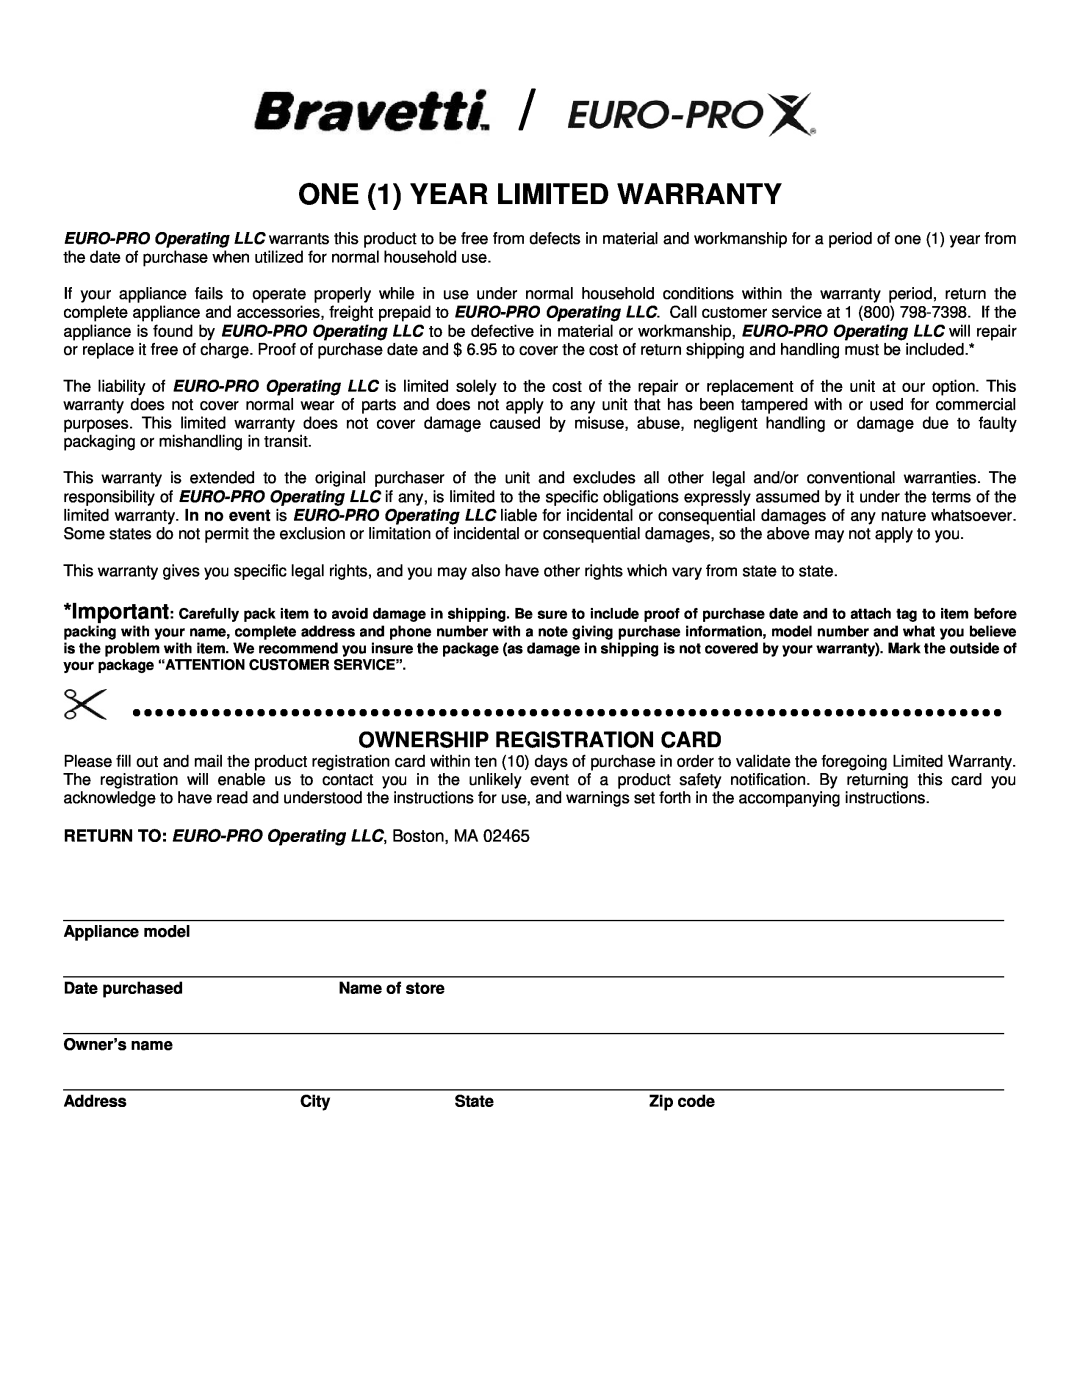 Bravetti EP545 manual ONE 1 YEAR LIMITED WARRANTY, Ownership Registration Card, RETURN TO EURO-PROOperating LLC, Boston, MA 